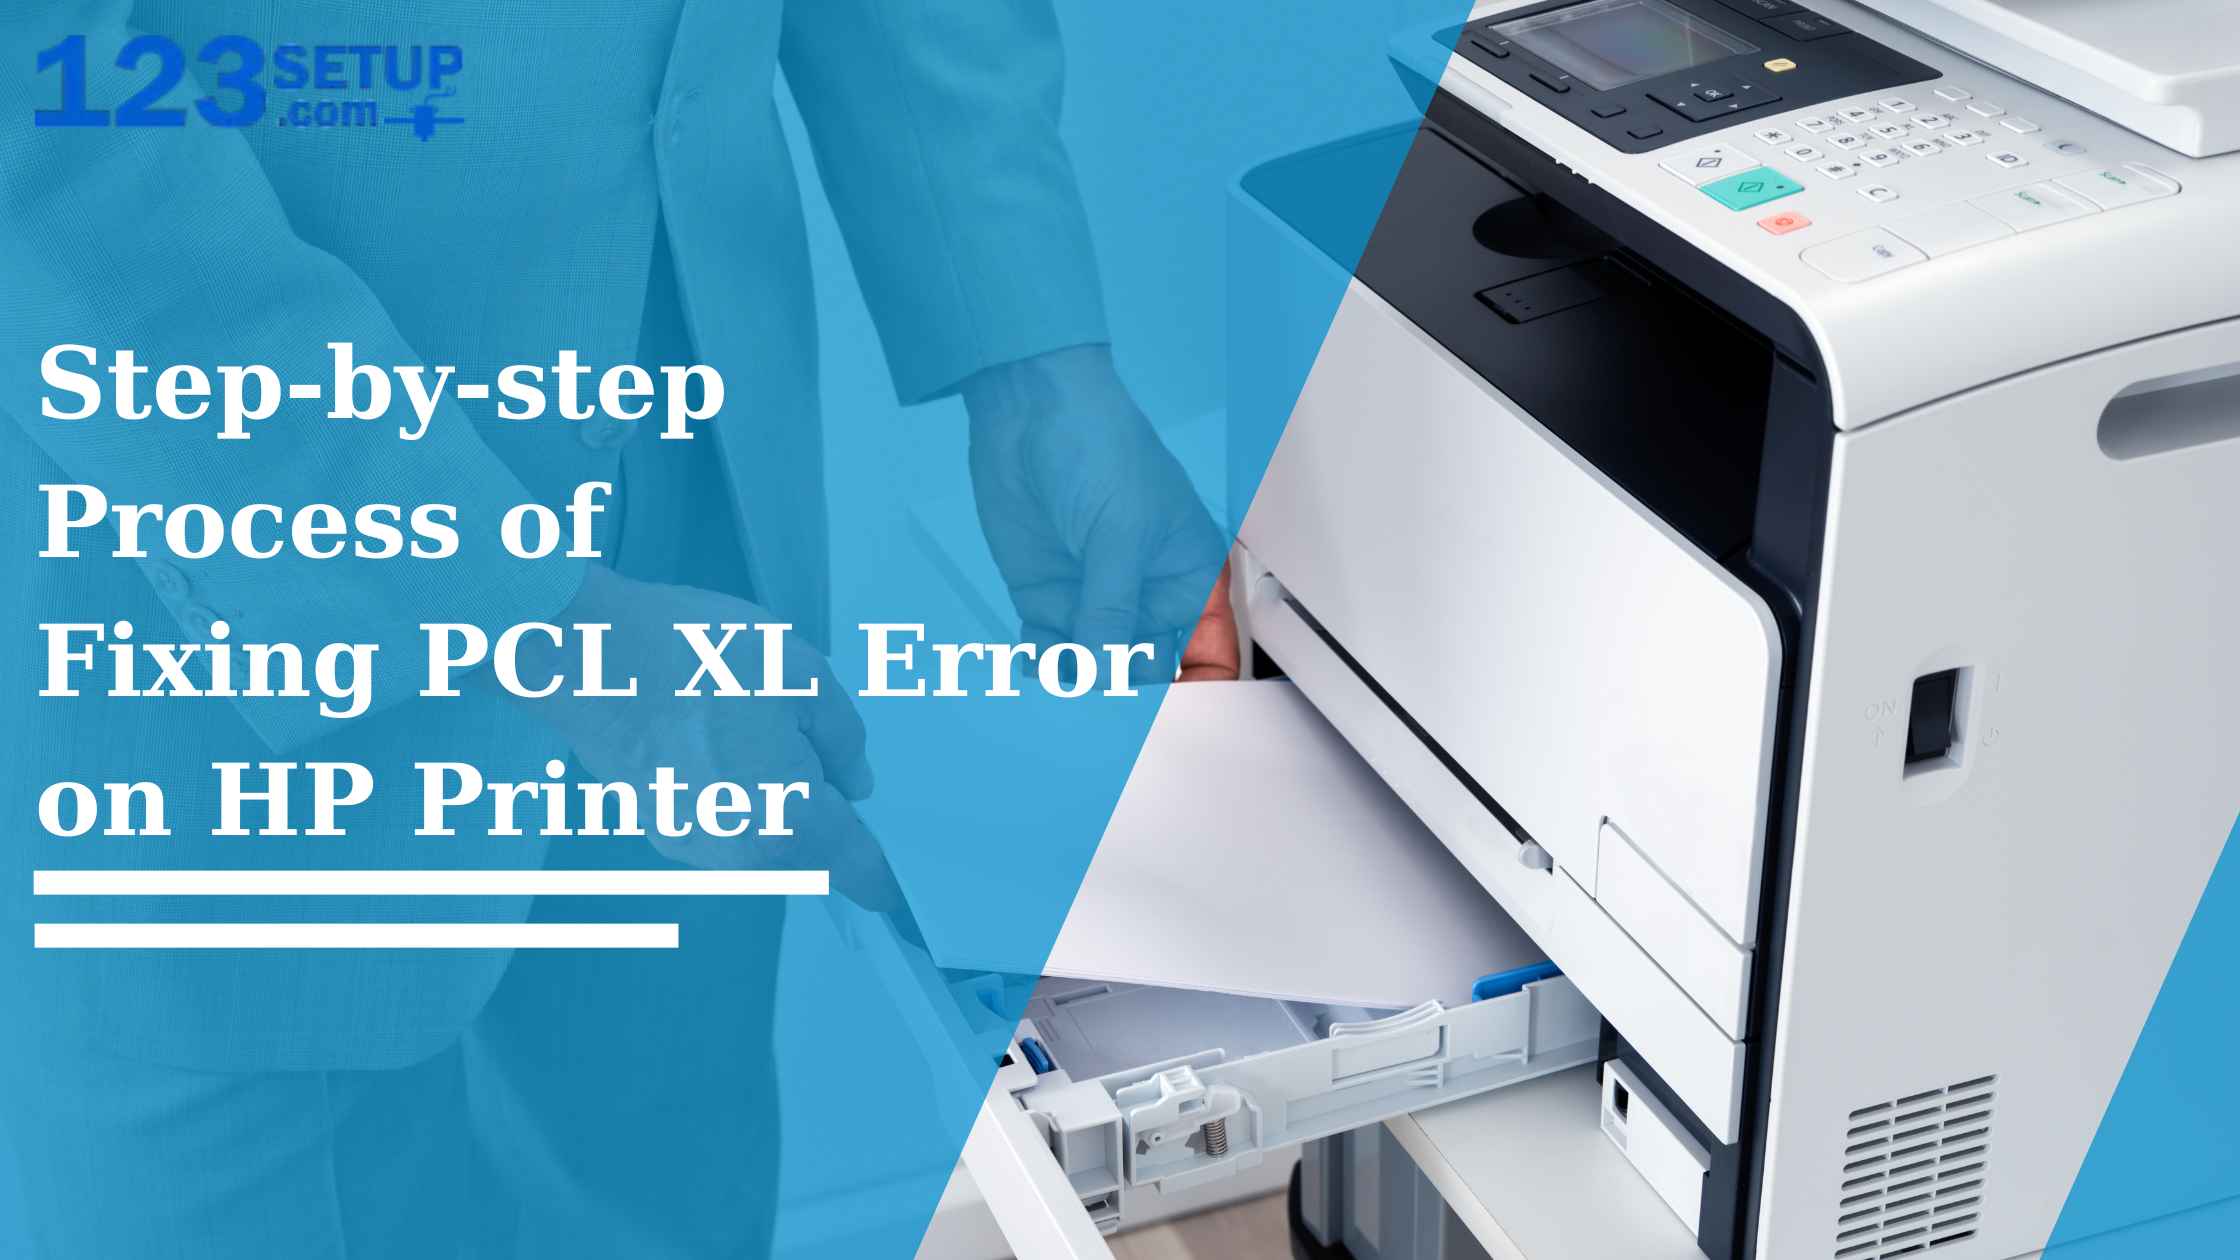 PCL XL Error on HP Printer